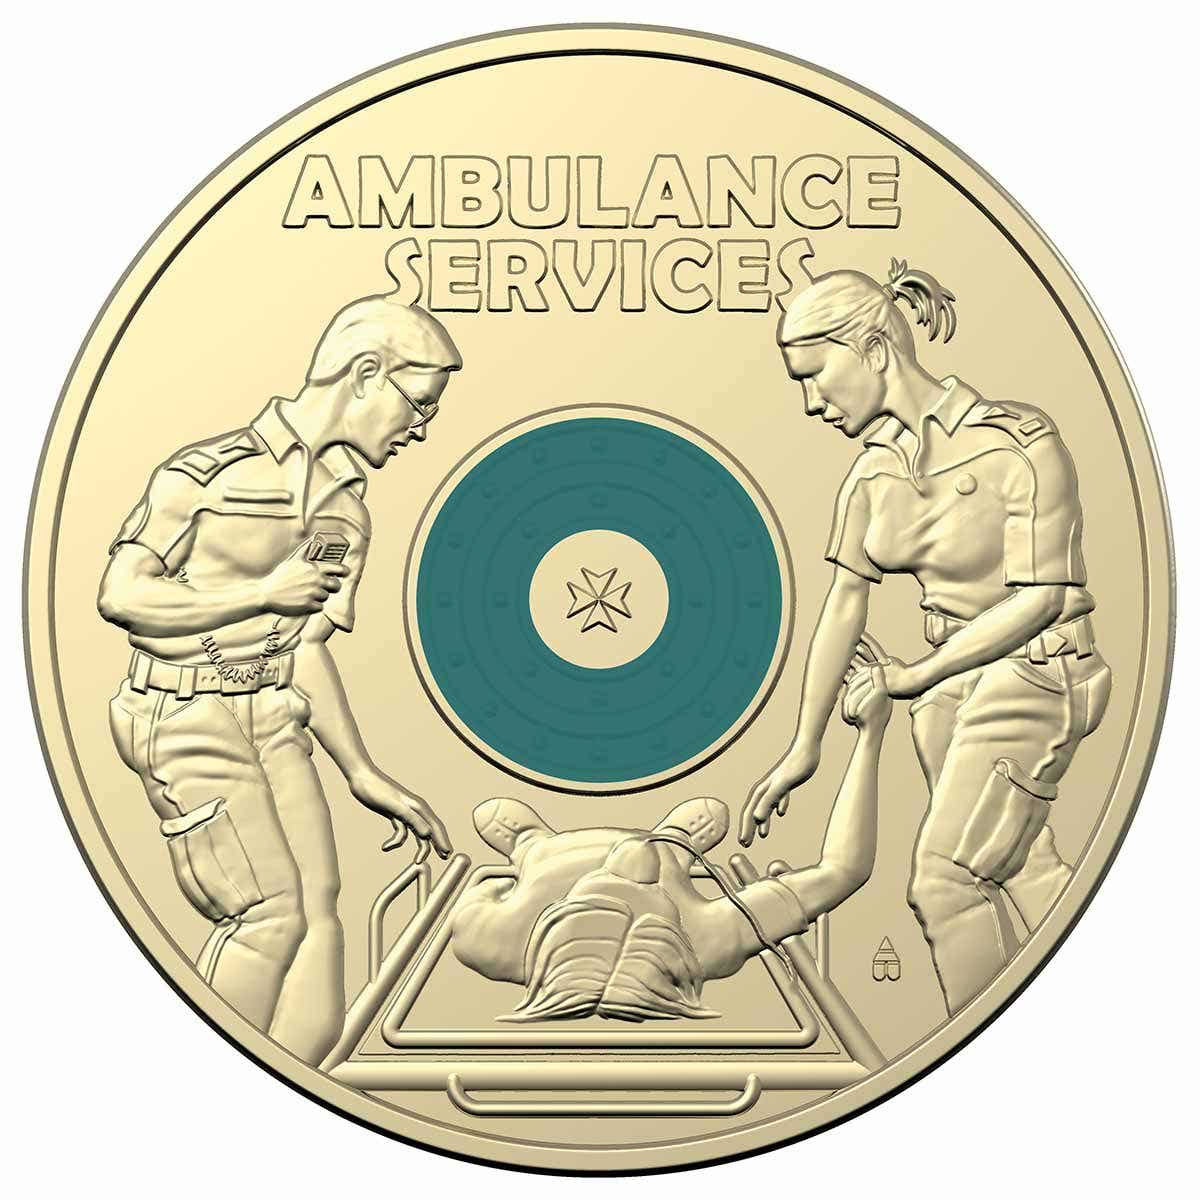 Australian Ambulance Services 2021 $2 Al-Br Coin Pack